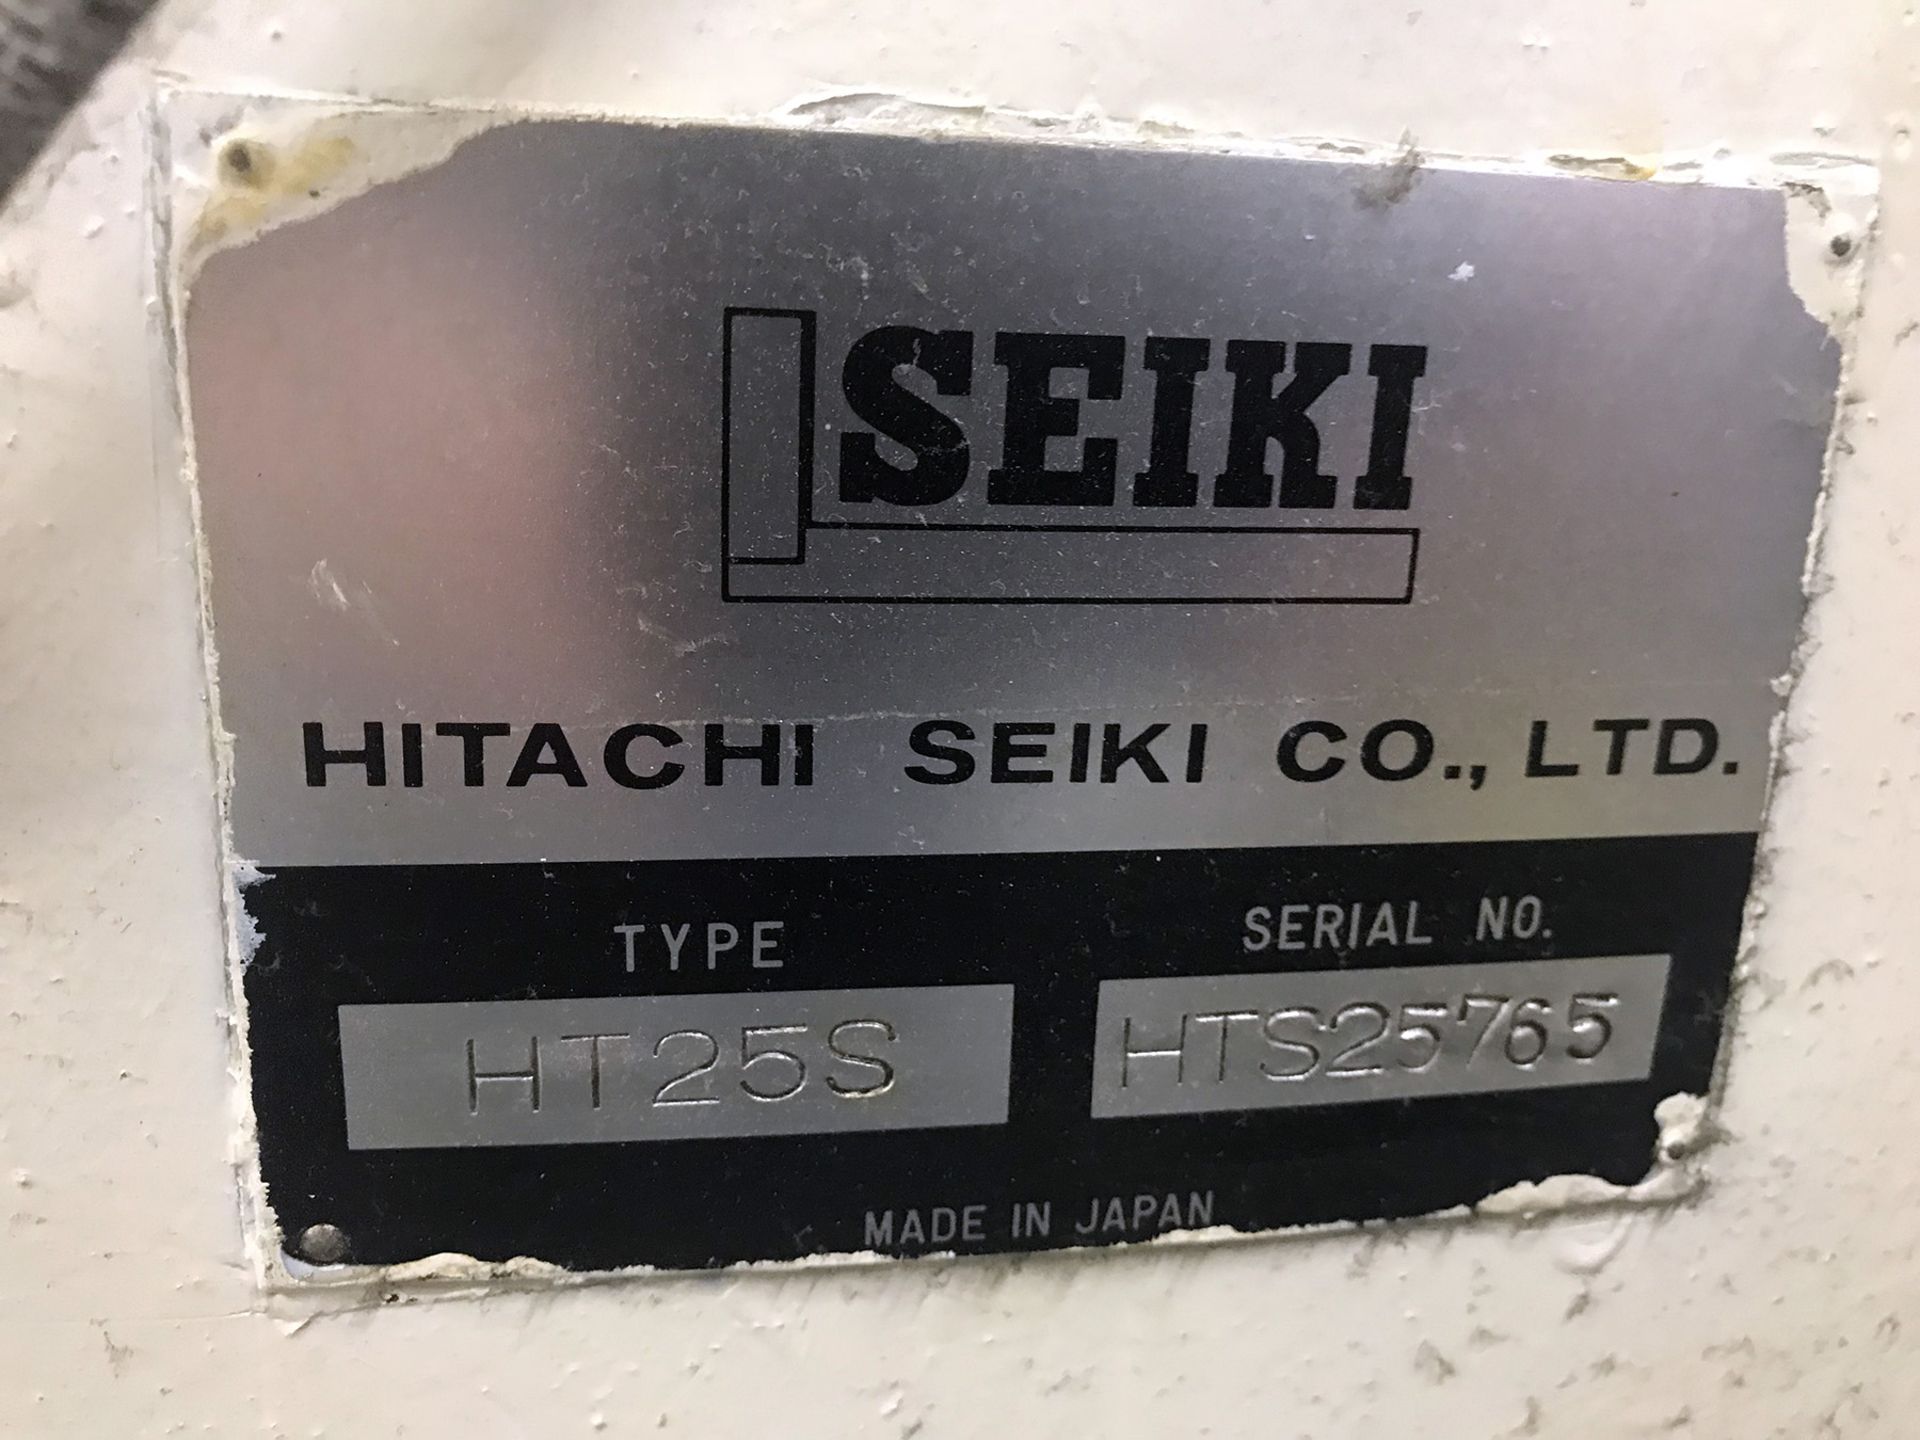 Hitachi Seiki Model HT25S CNC Slant Bed Lathe - Image 8 of 8